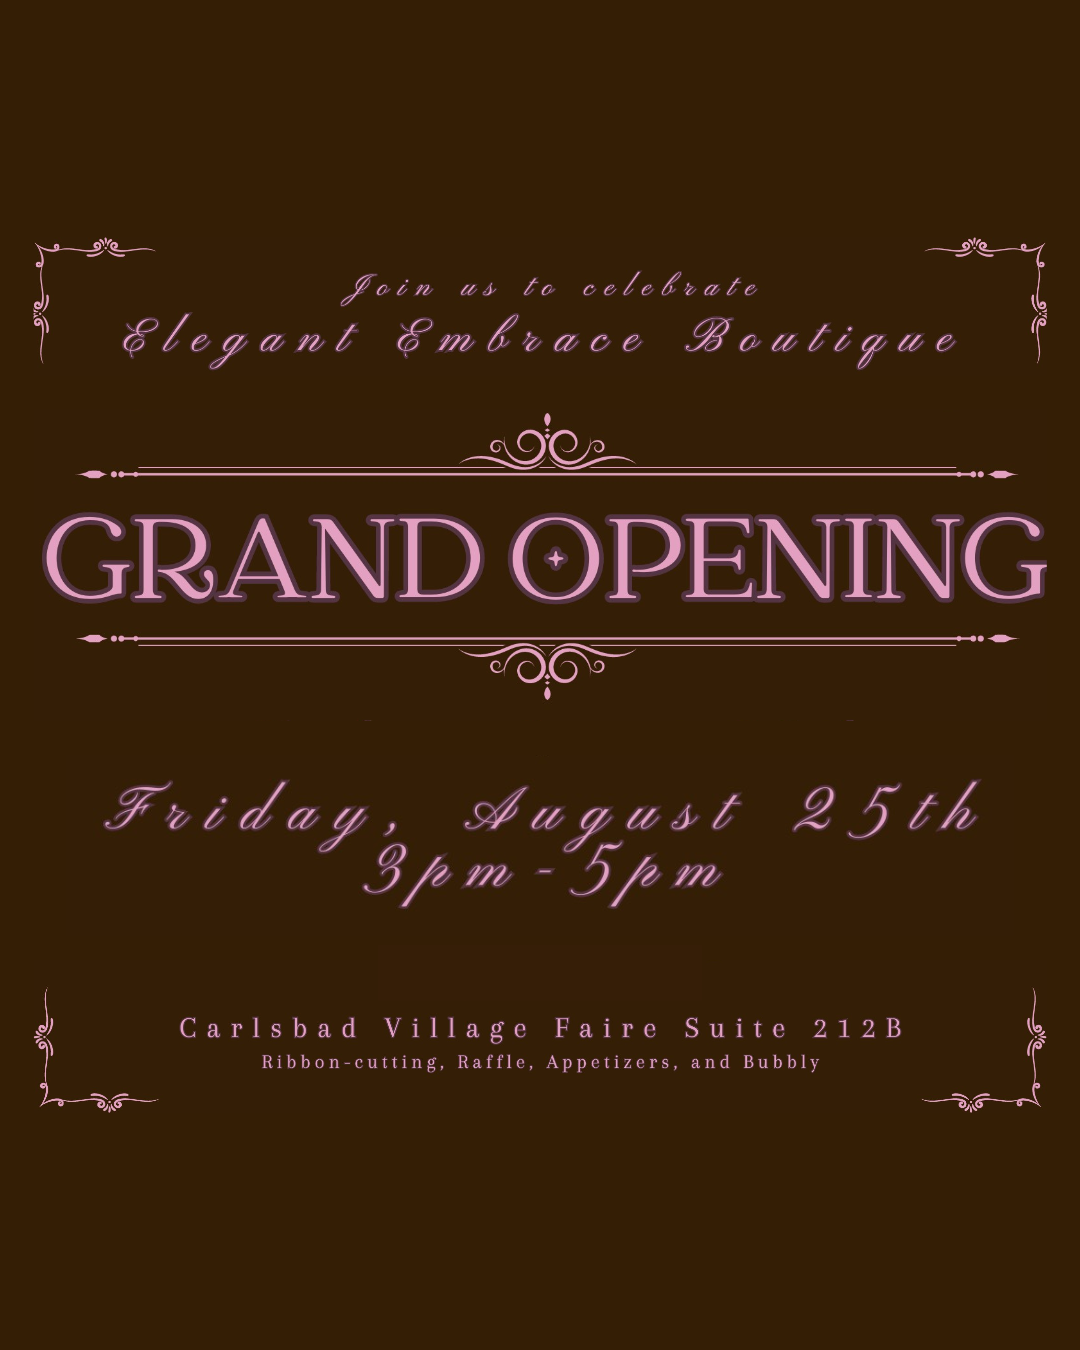 Elegant_embrace_boutique_grand_opening.jpg